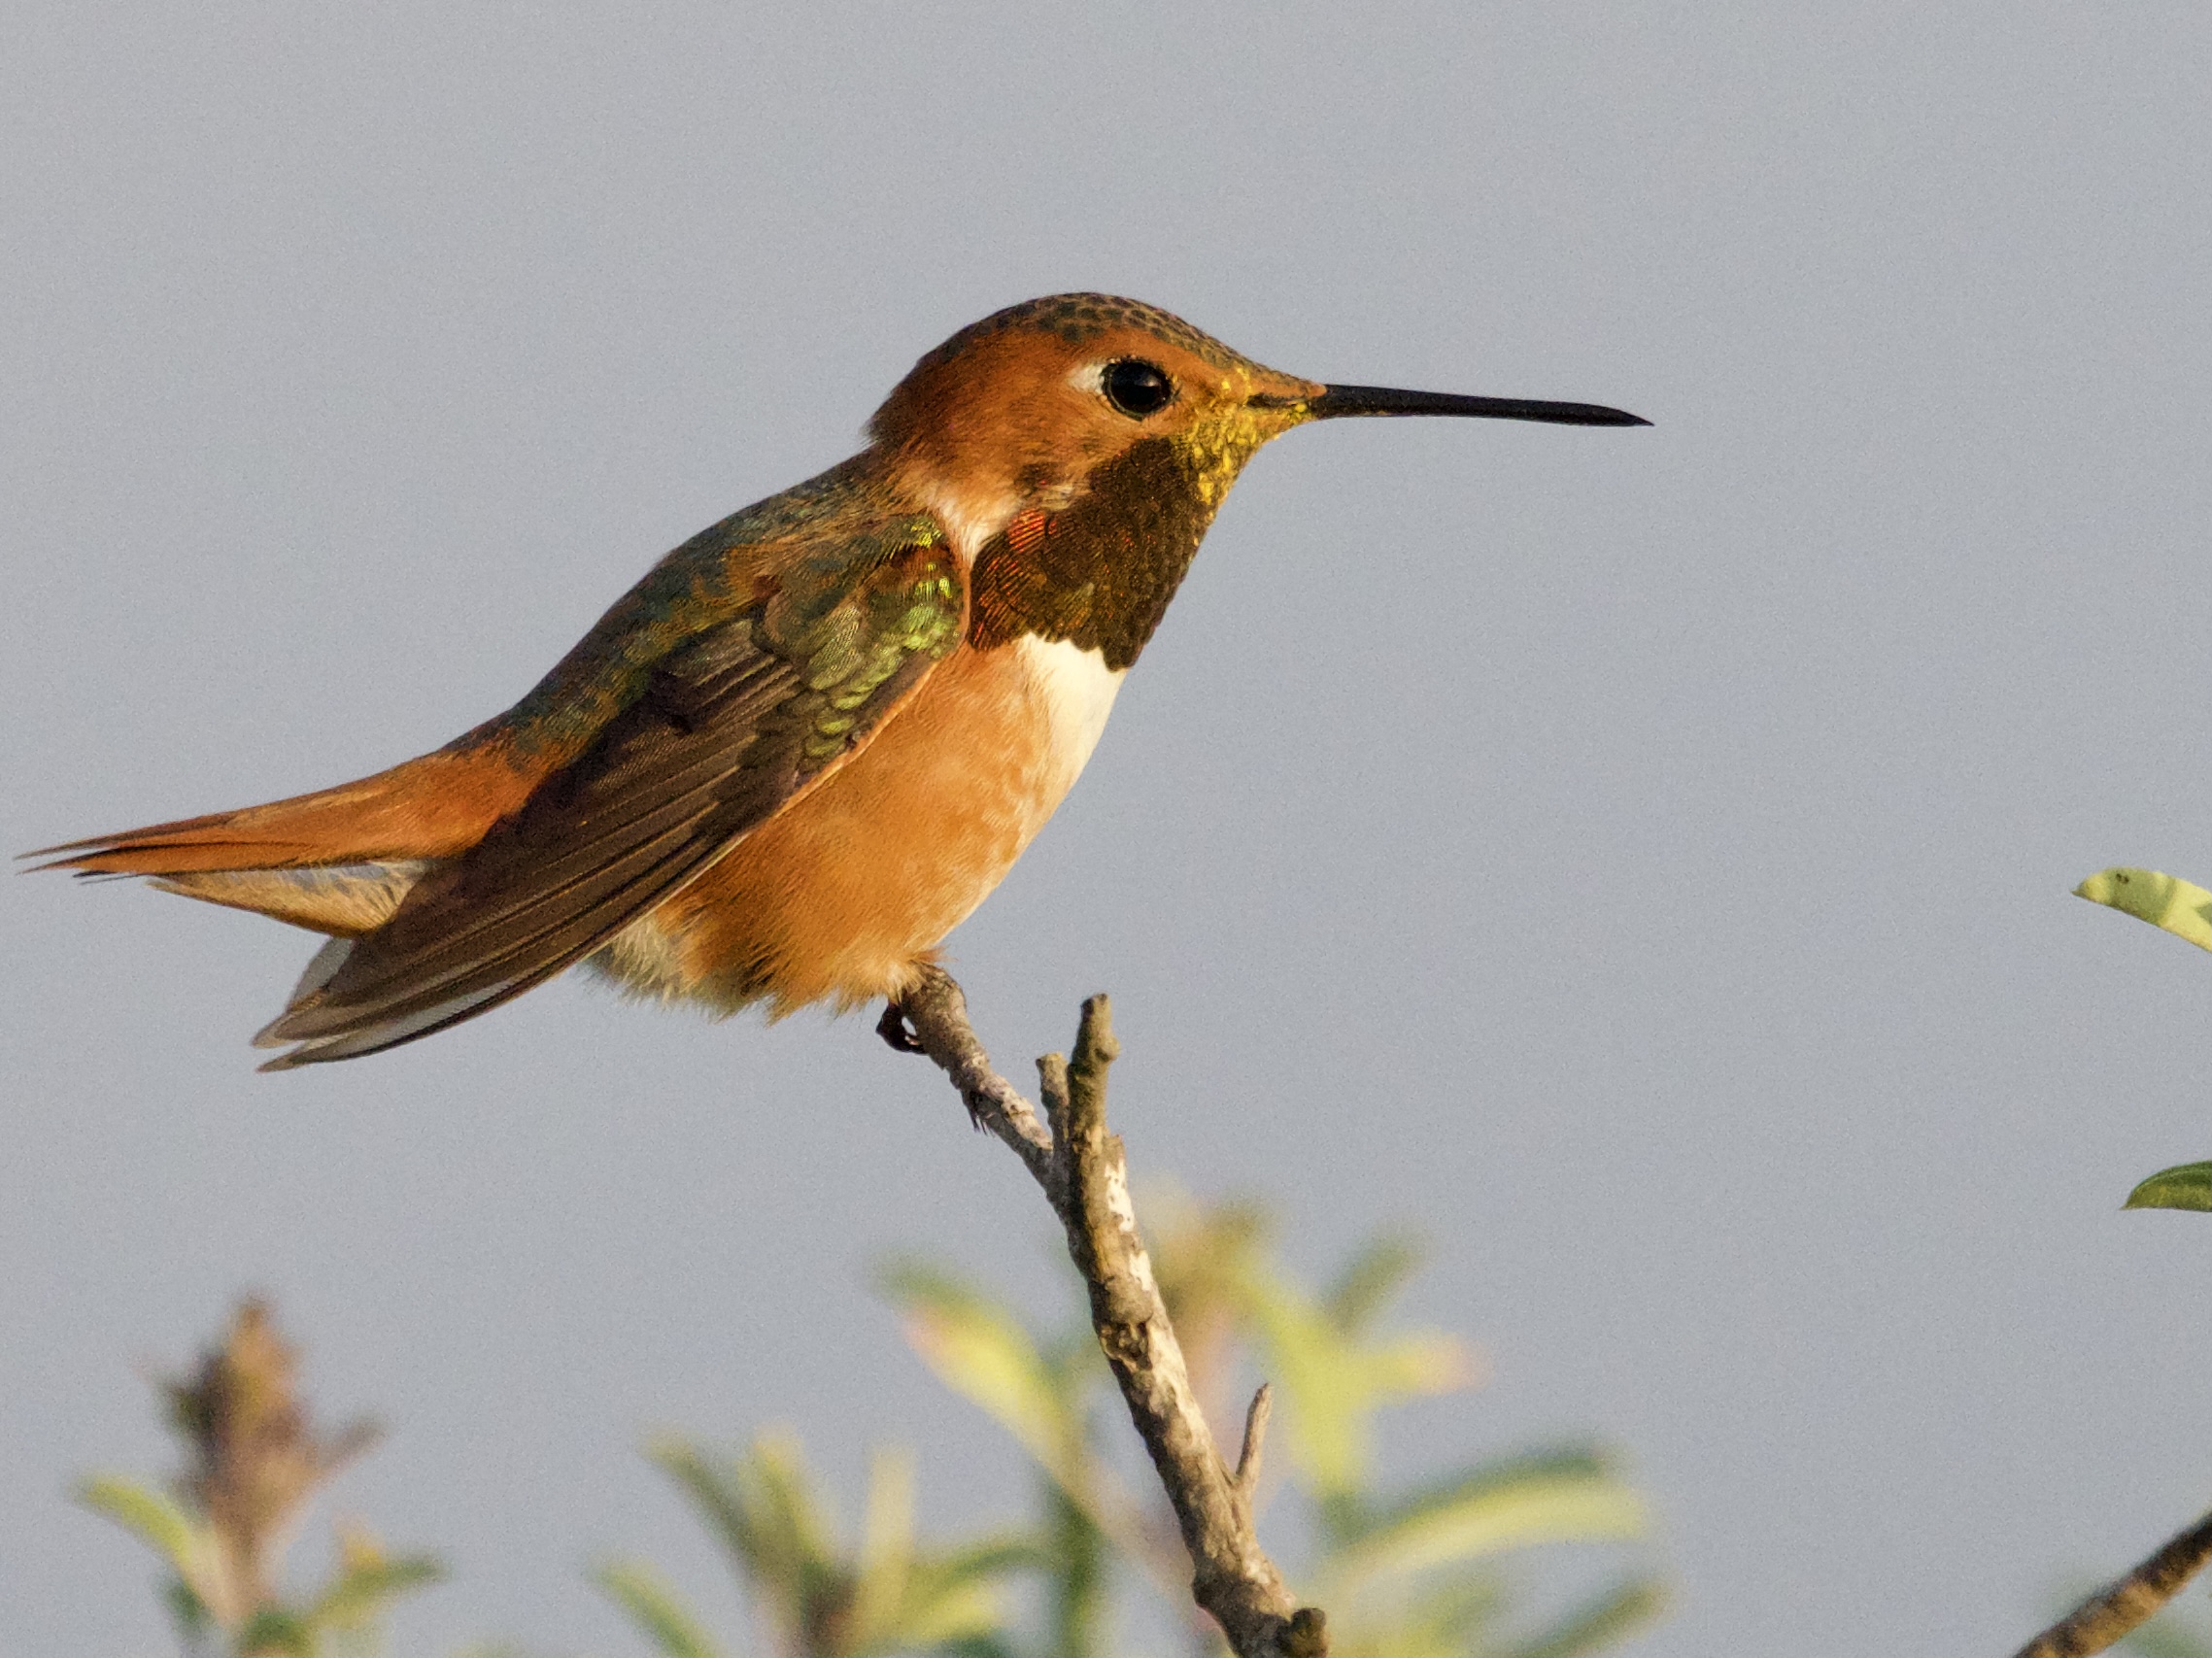 Rufous/Allen’s Hummingbird male on branch